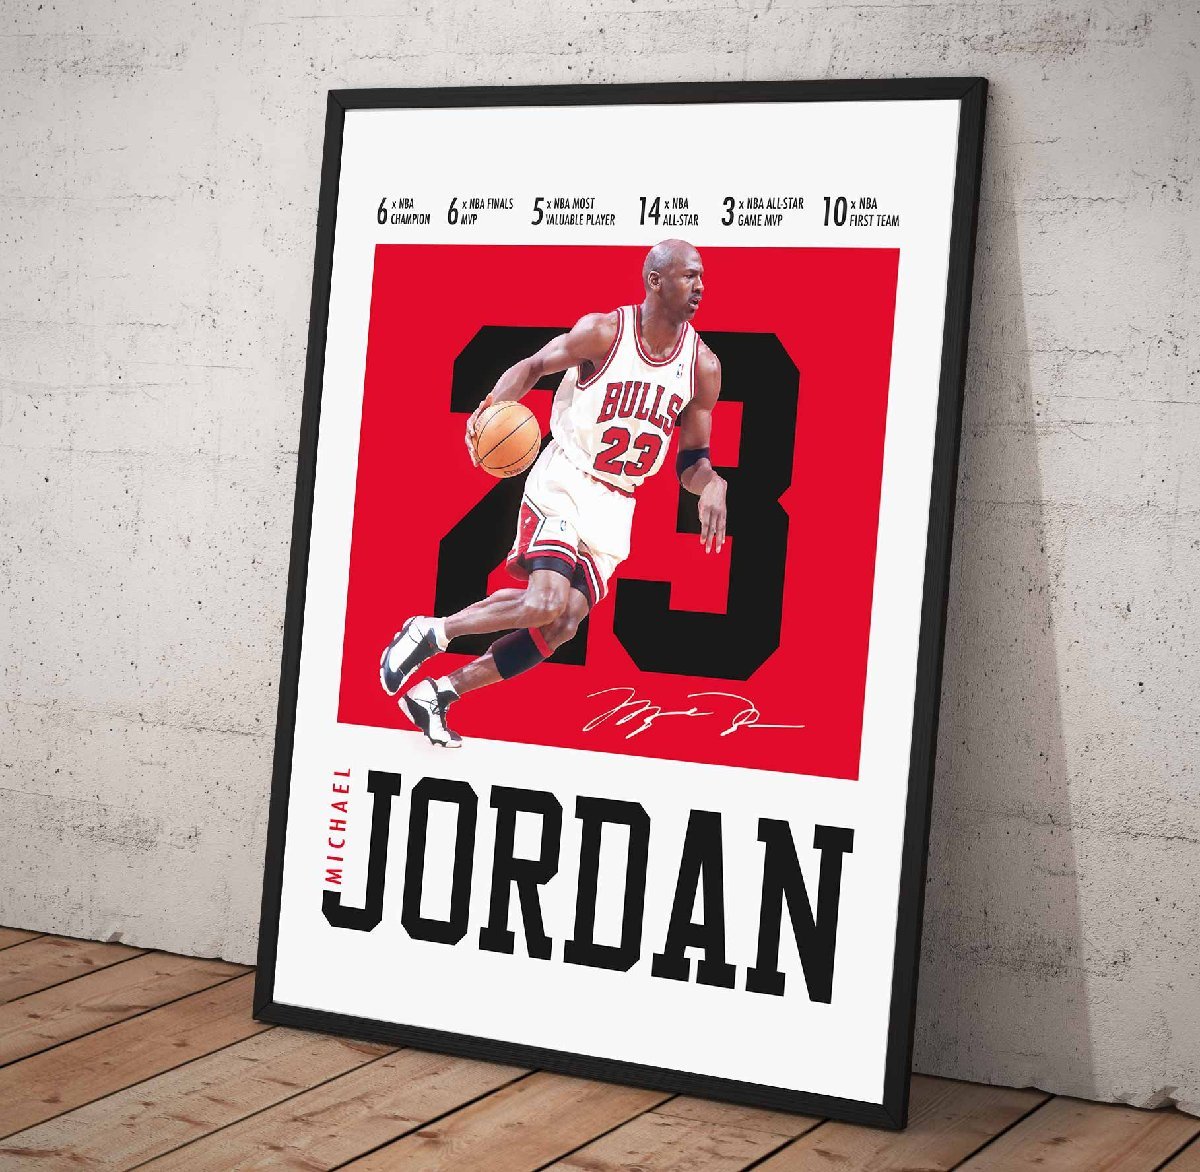  постер [ NBA Michael * Jordan / Michael Jordan ]poster рама нет 297×210mm -c1